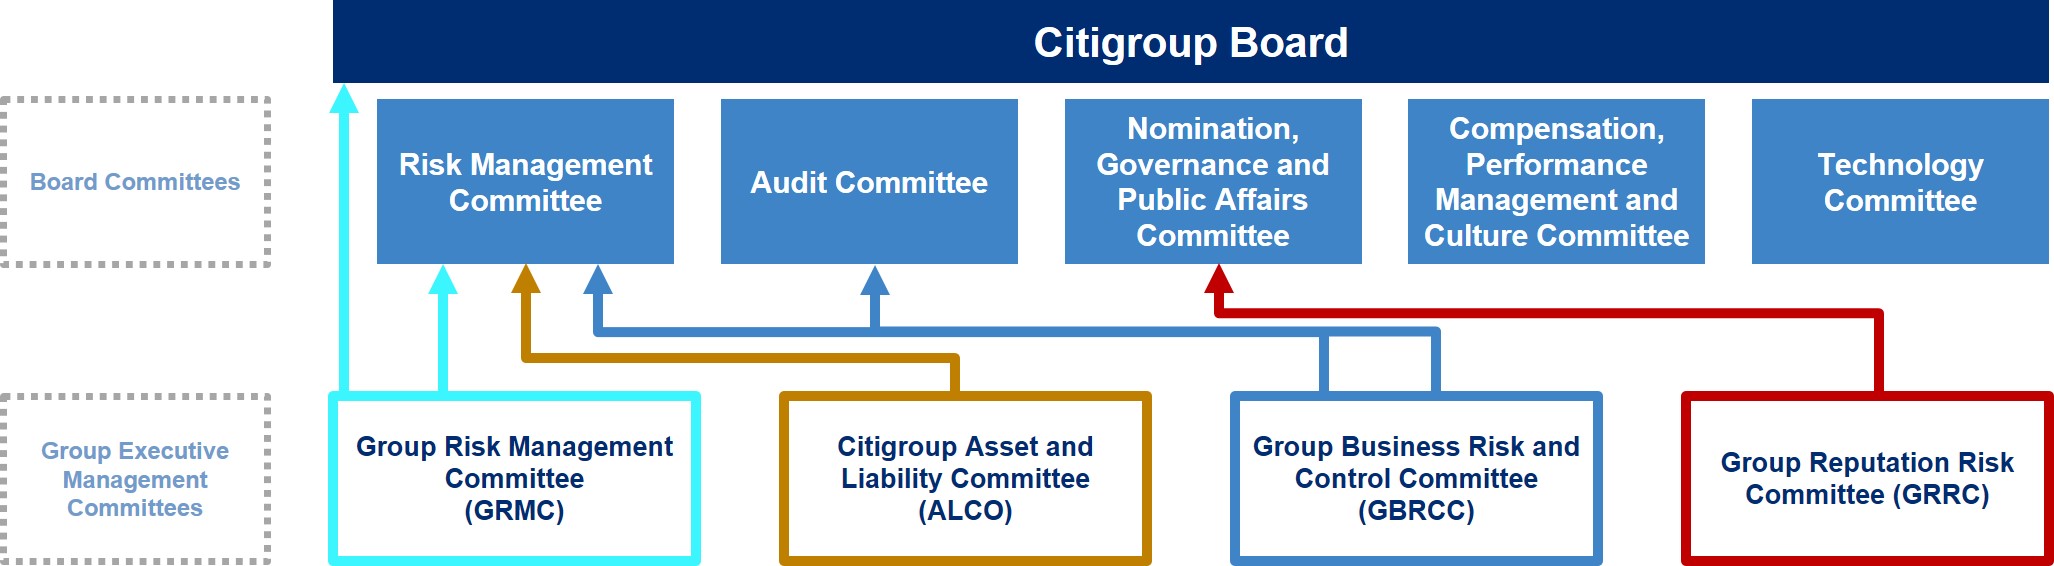 Updated Citigroup Board Committees Diagram.jpg